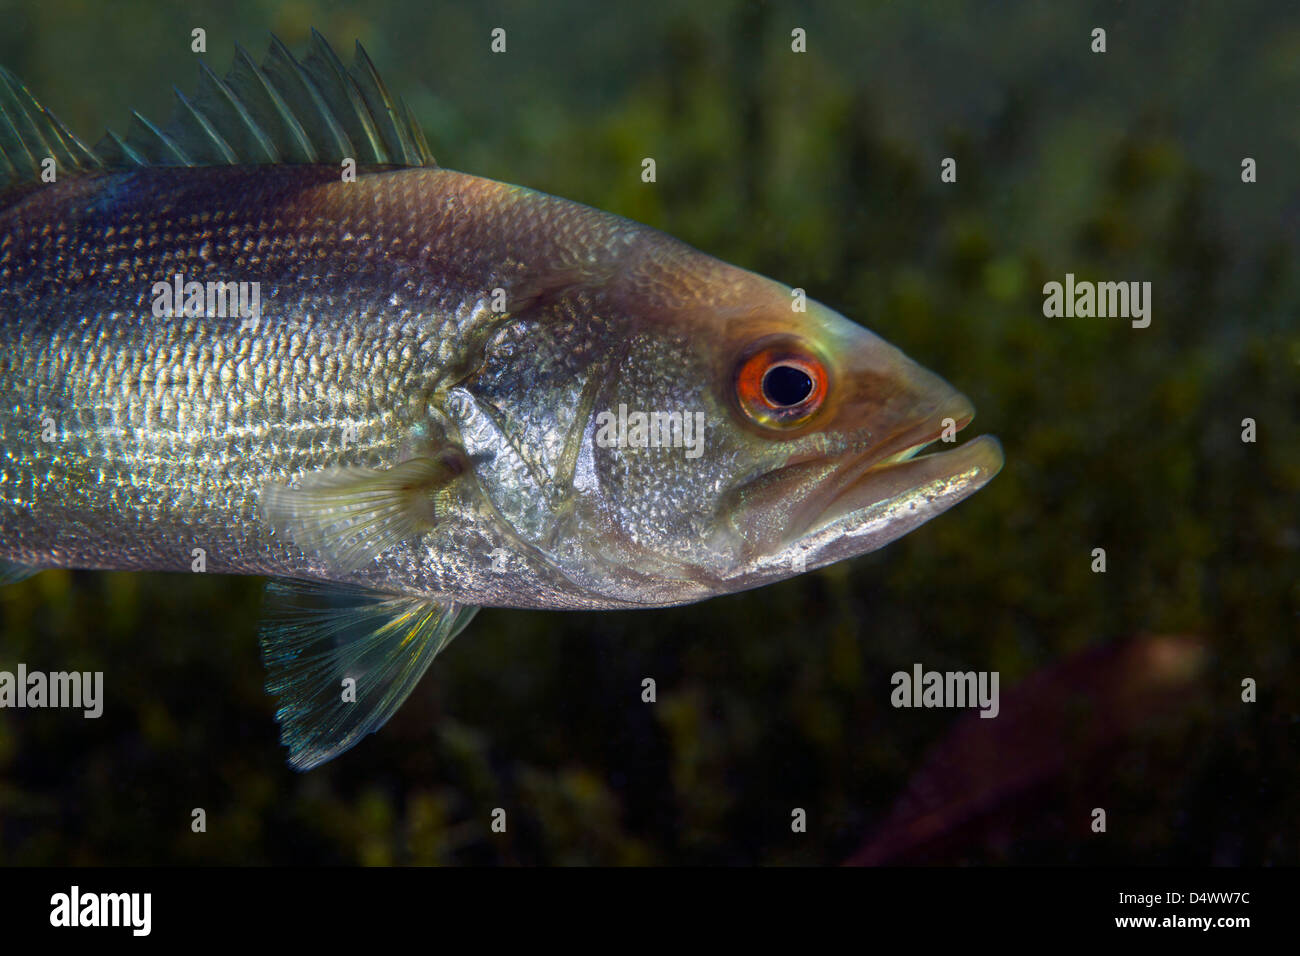 A close-up view of an adolescent Florida Largemouth Bass. Stock Photo